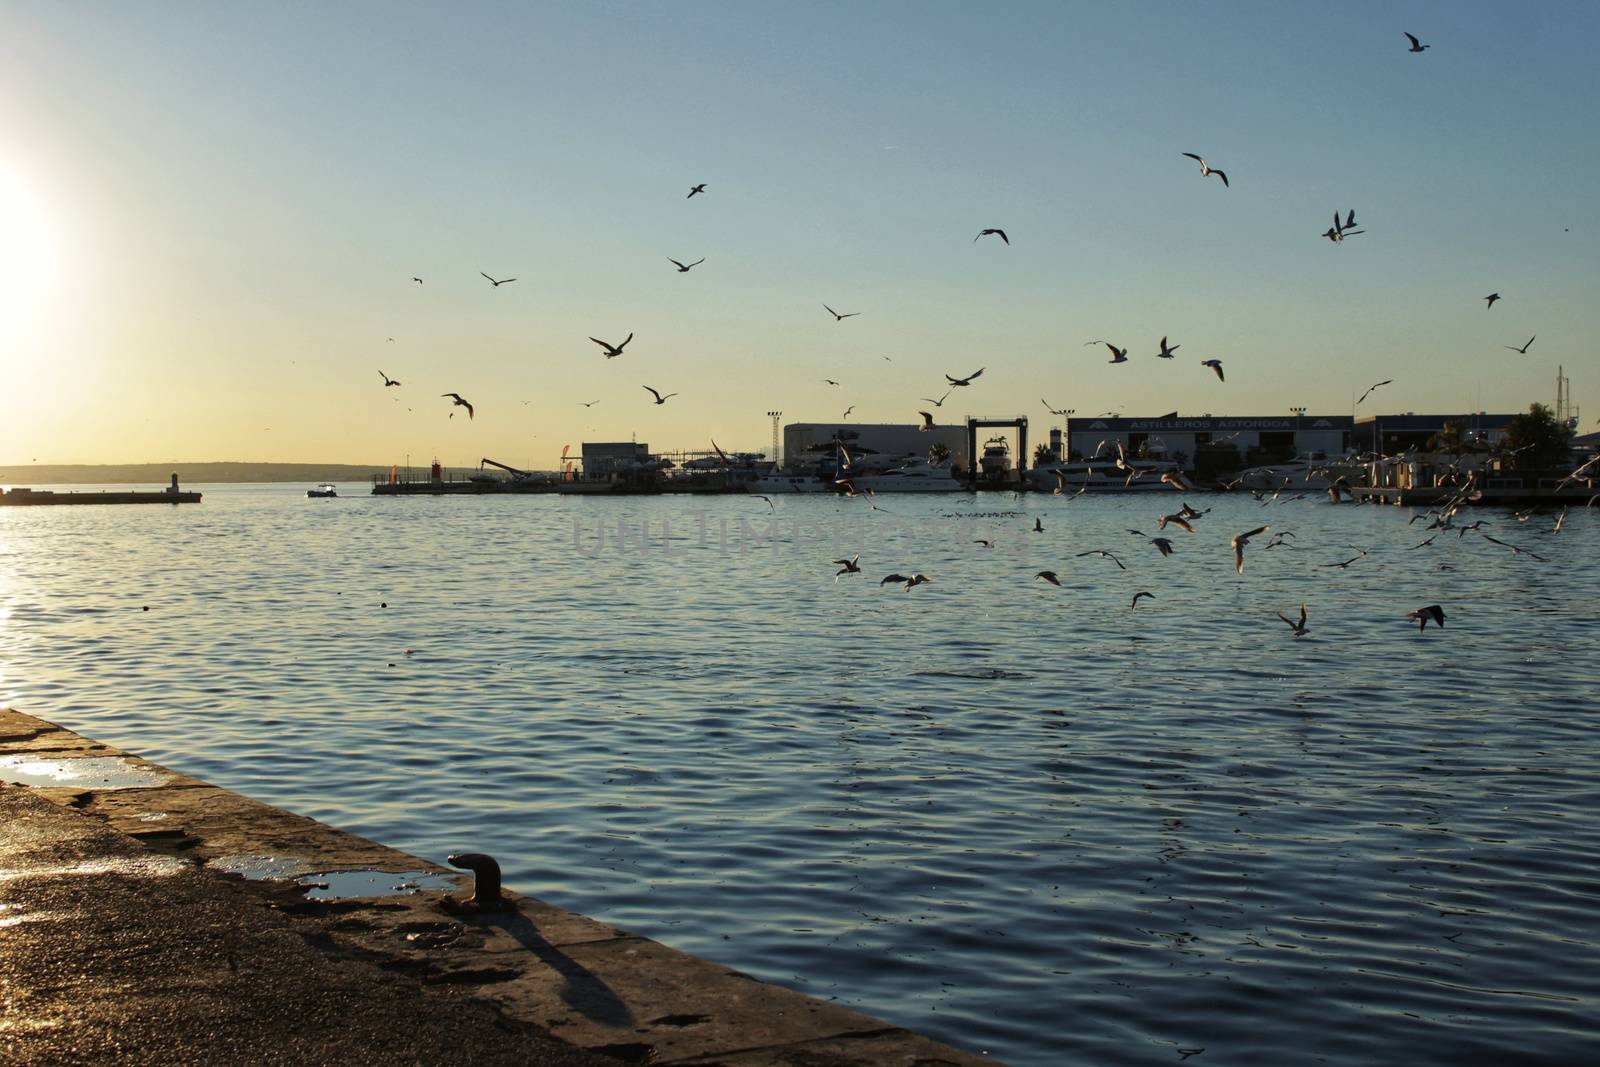 Seagulls in the port of Santa Pola, Alicante. Spain.